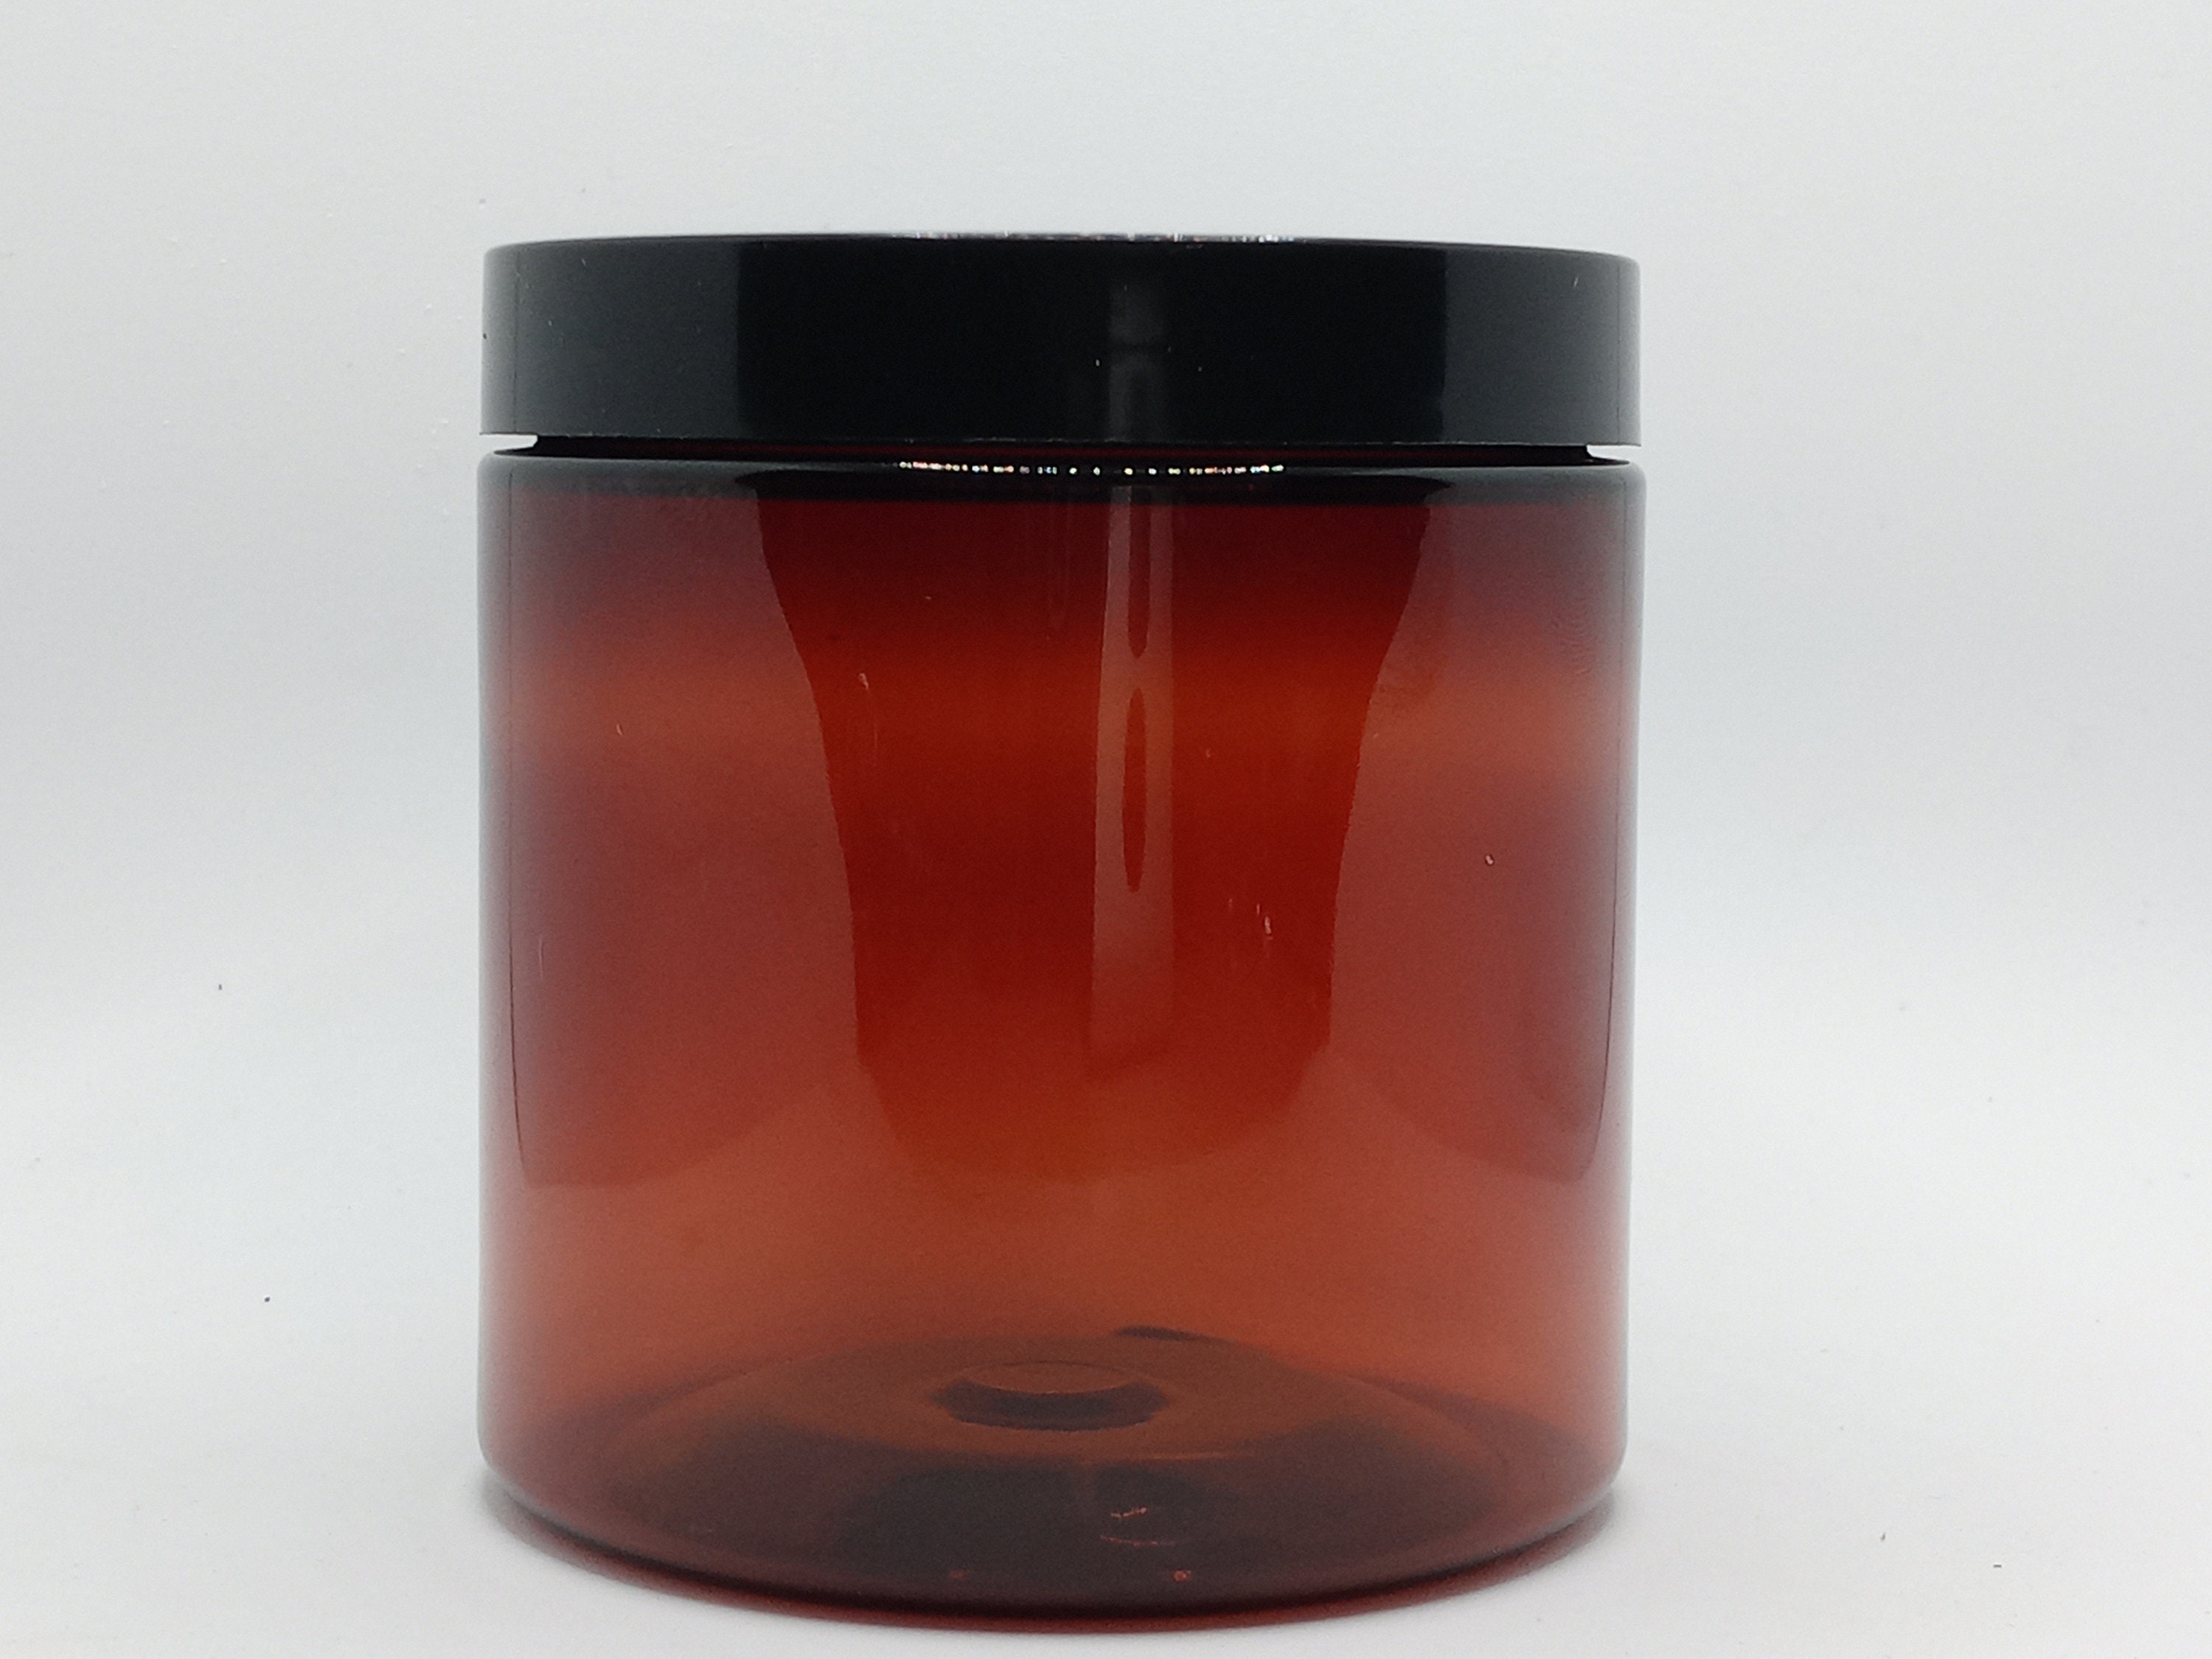 Plastic Spice Jars - 16 oz, Unlined, Black Cap